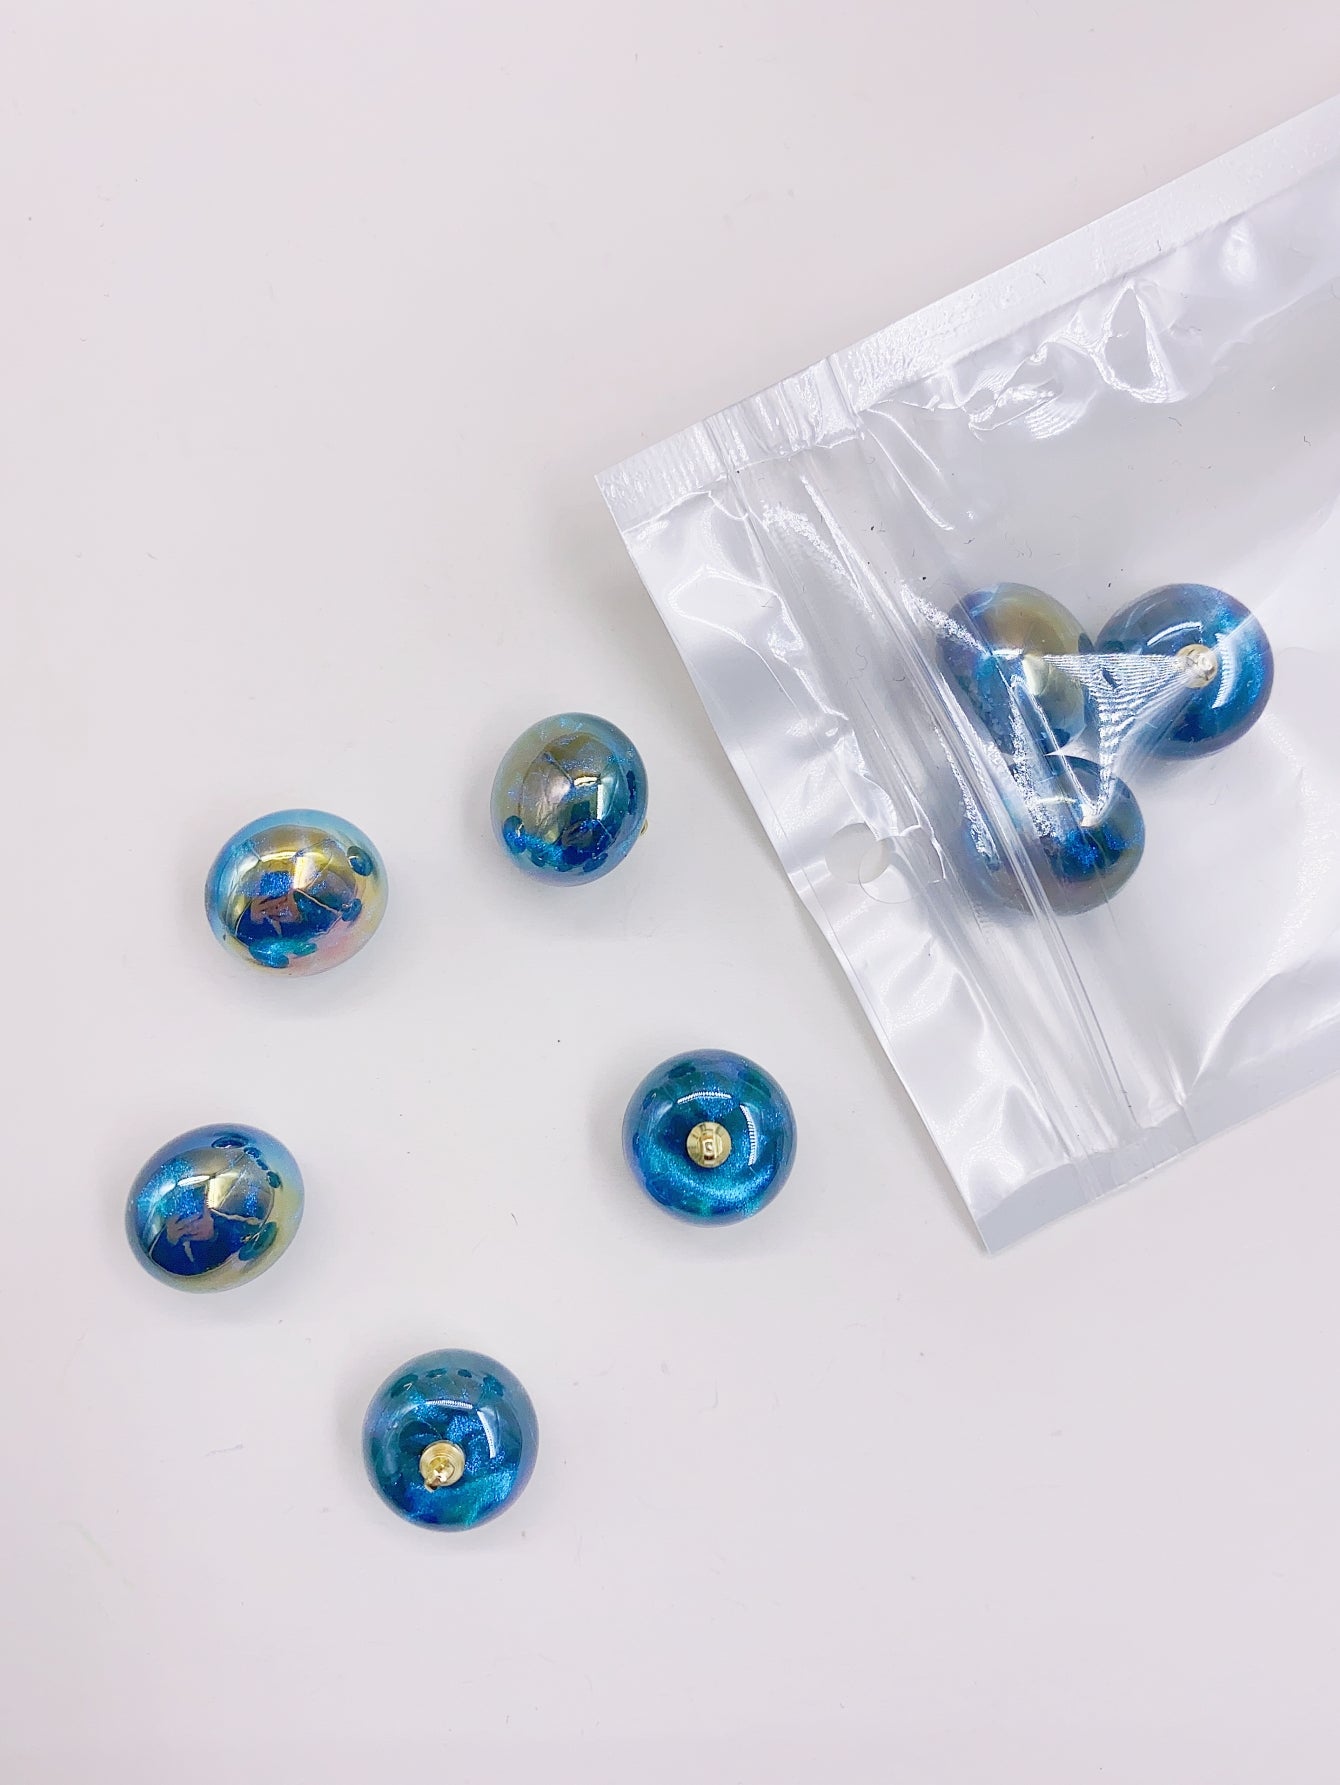 New high-end mermaid bun beads jewelry pendant 8 pieces